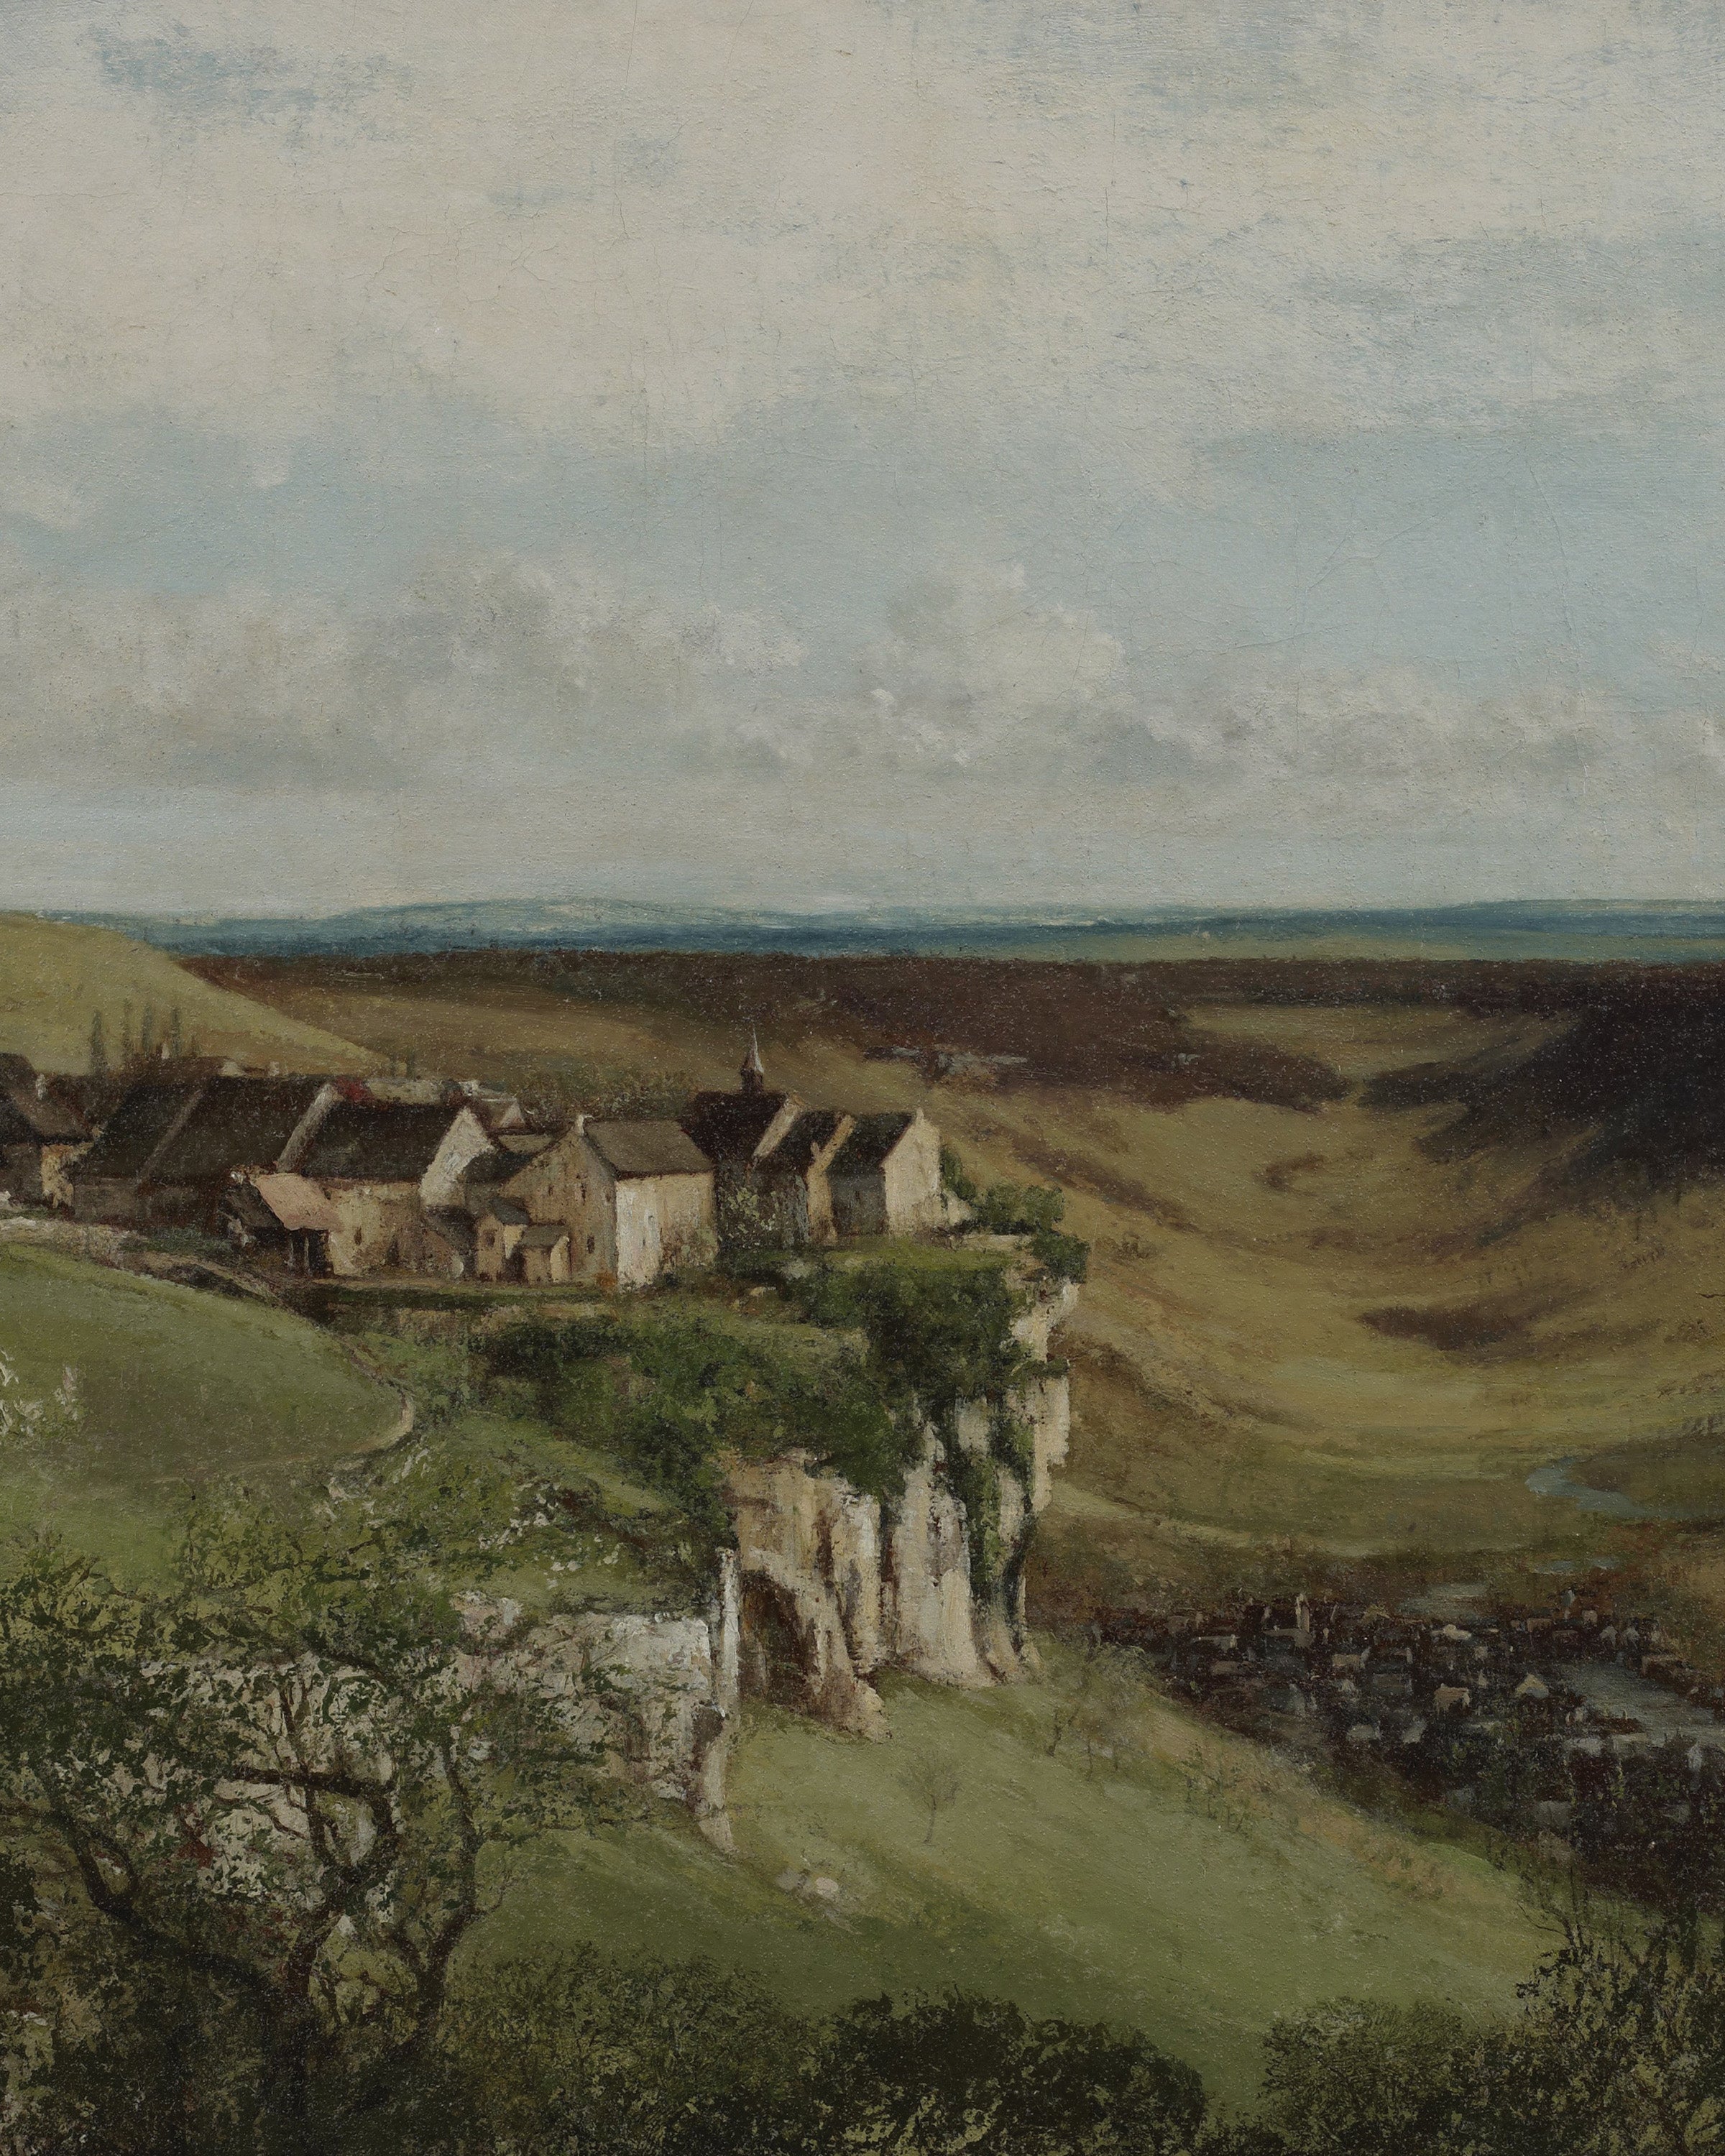 Vintage Landscape Print - English Countryside